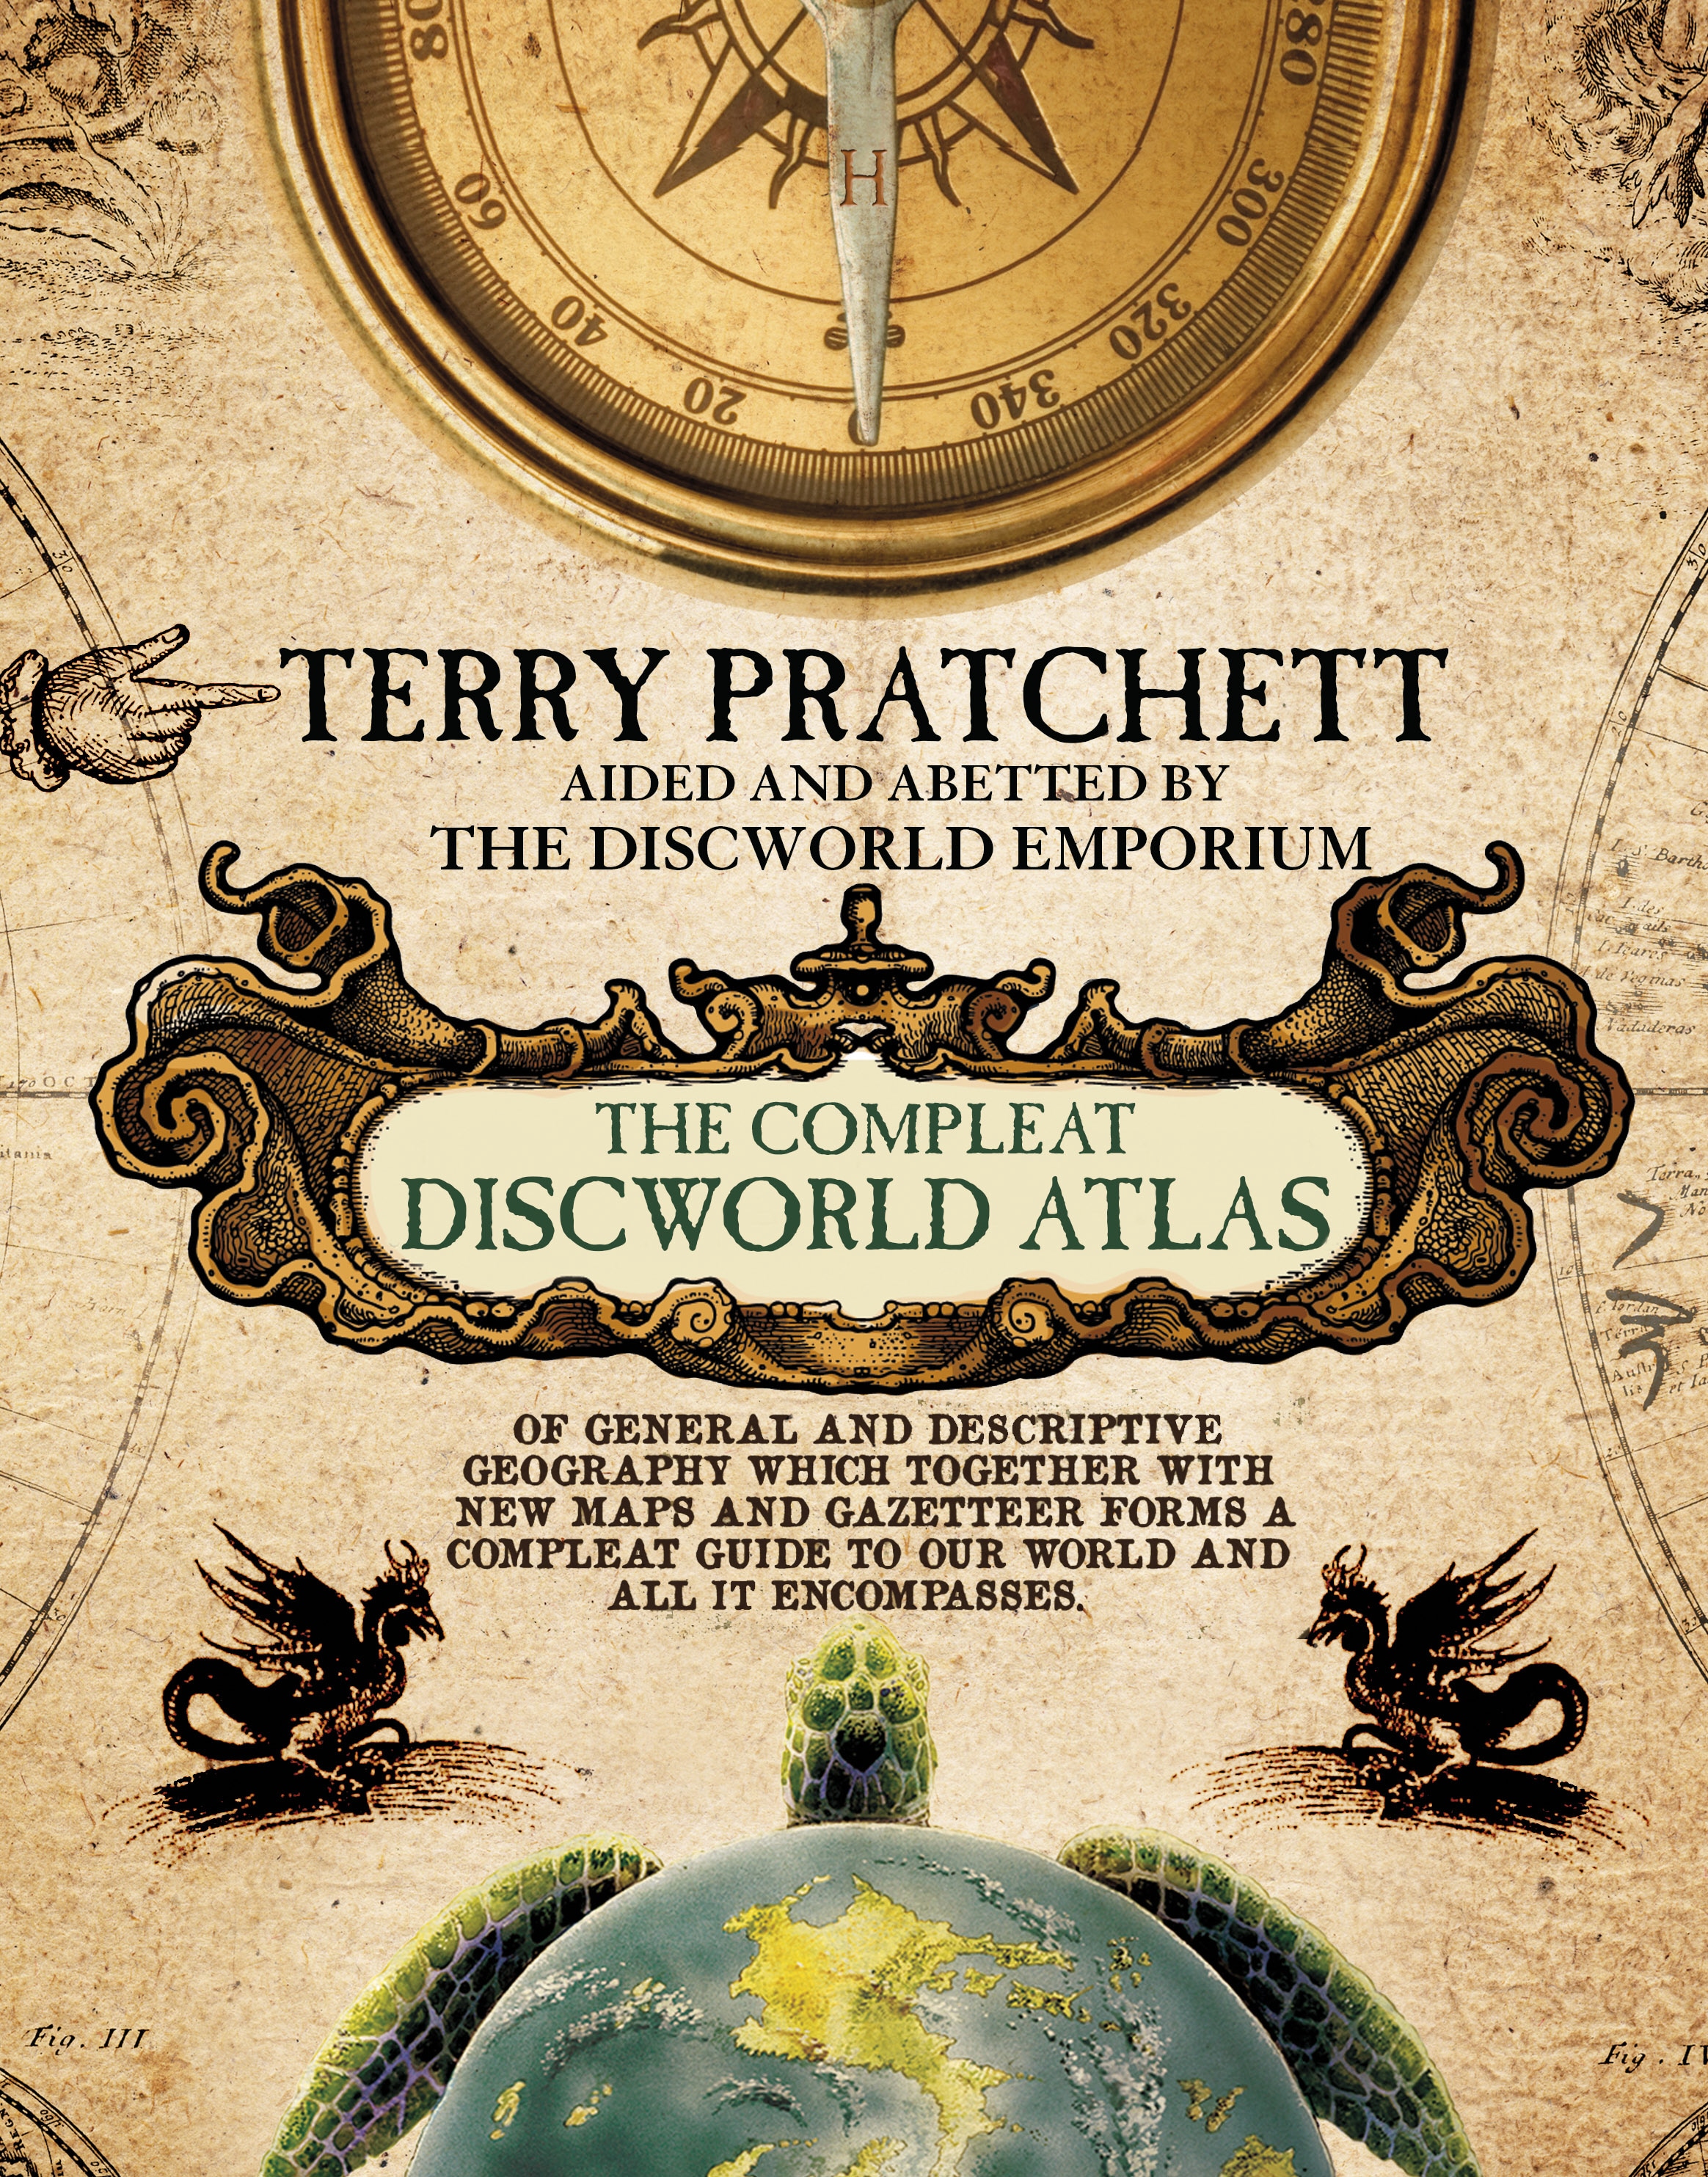 Book “The Discworld Atlas” by Terry Pratchett, The Discworld Emporium — October 22, 2015